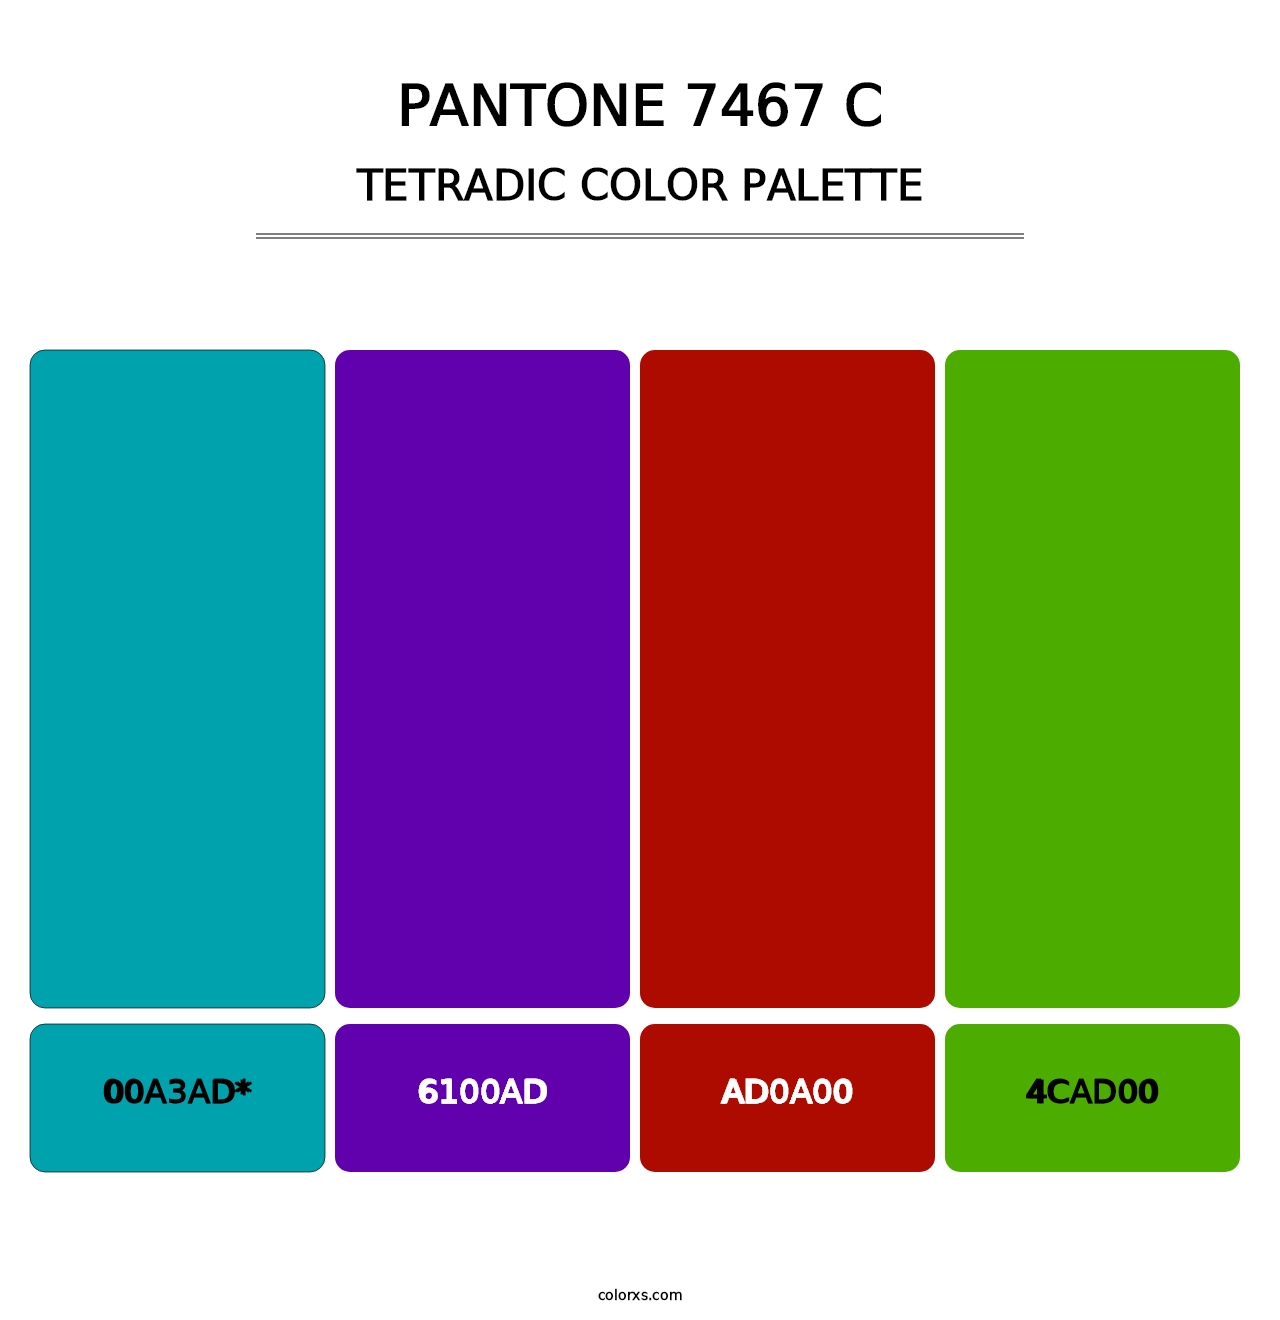 PANTONE 7467 C - Tetradic Color Palette